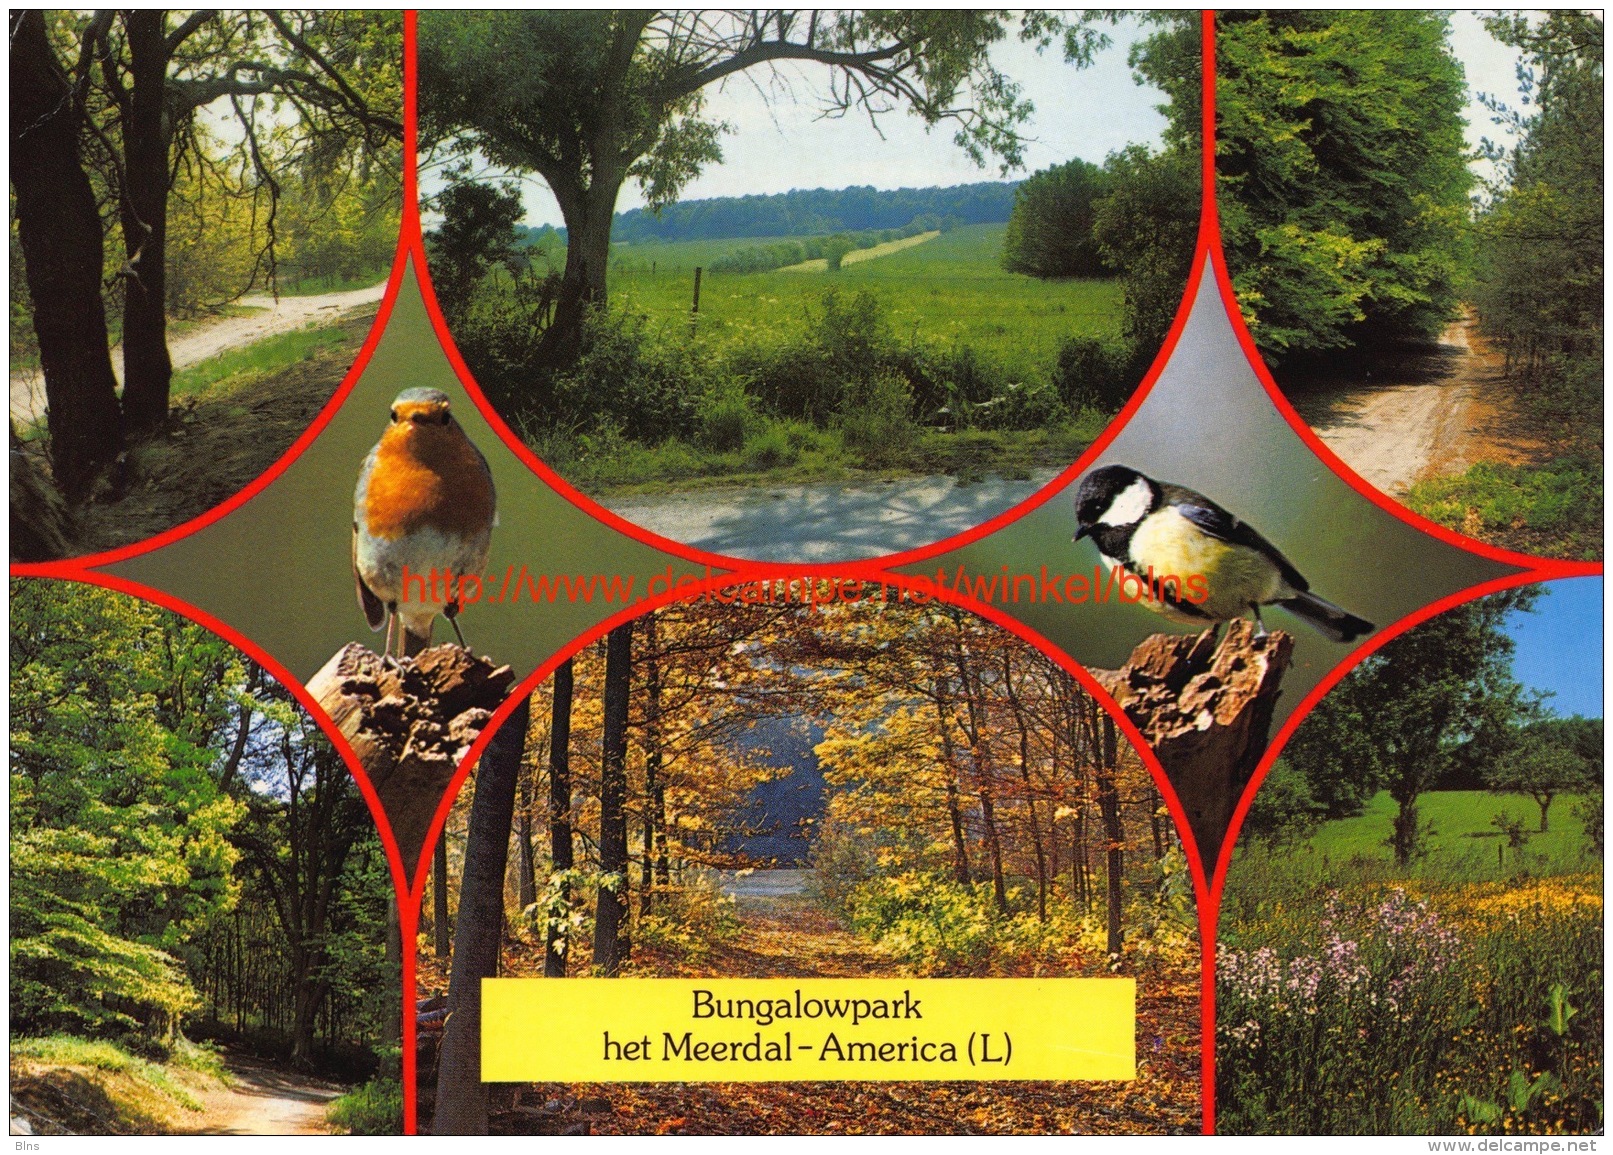 Bungalowpark Het Meerdal - America - Horst